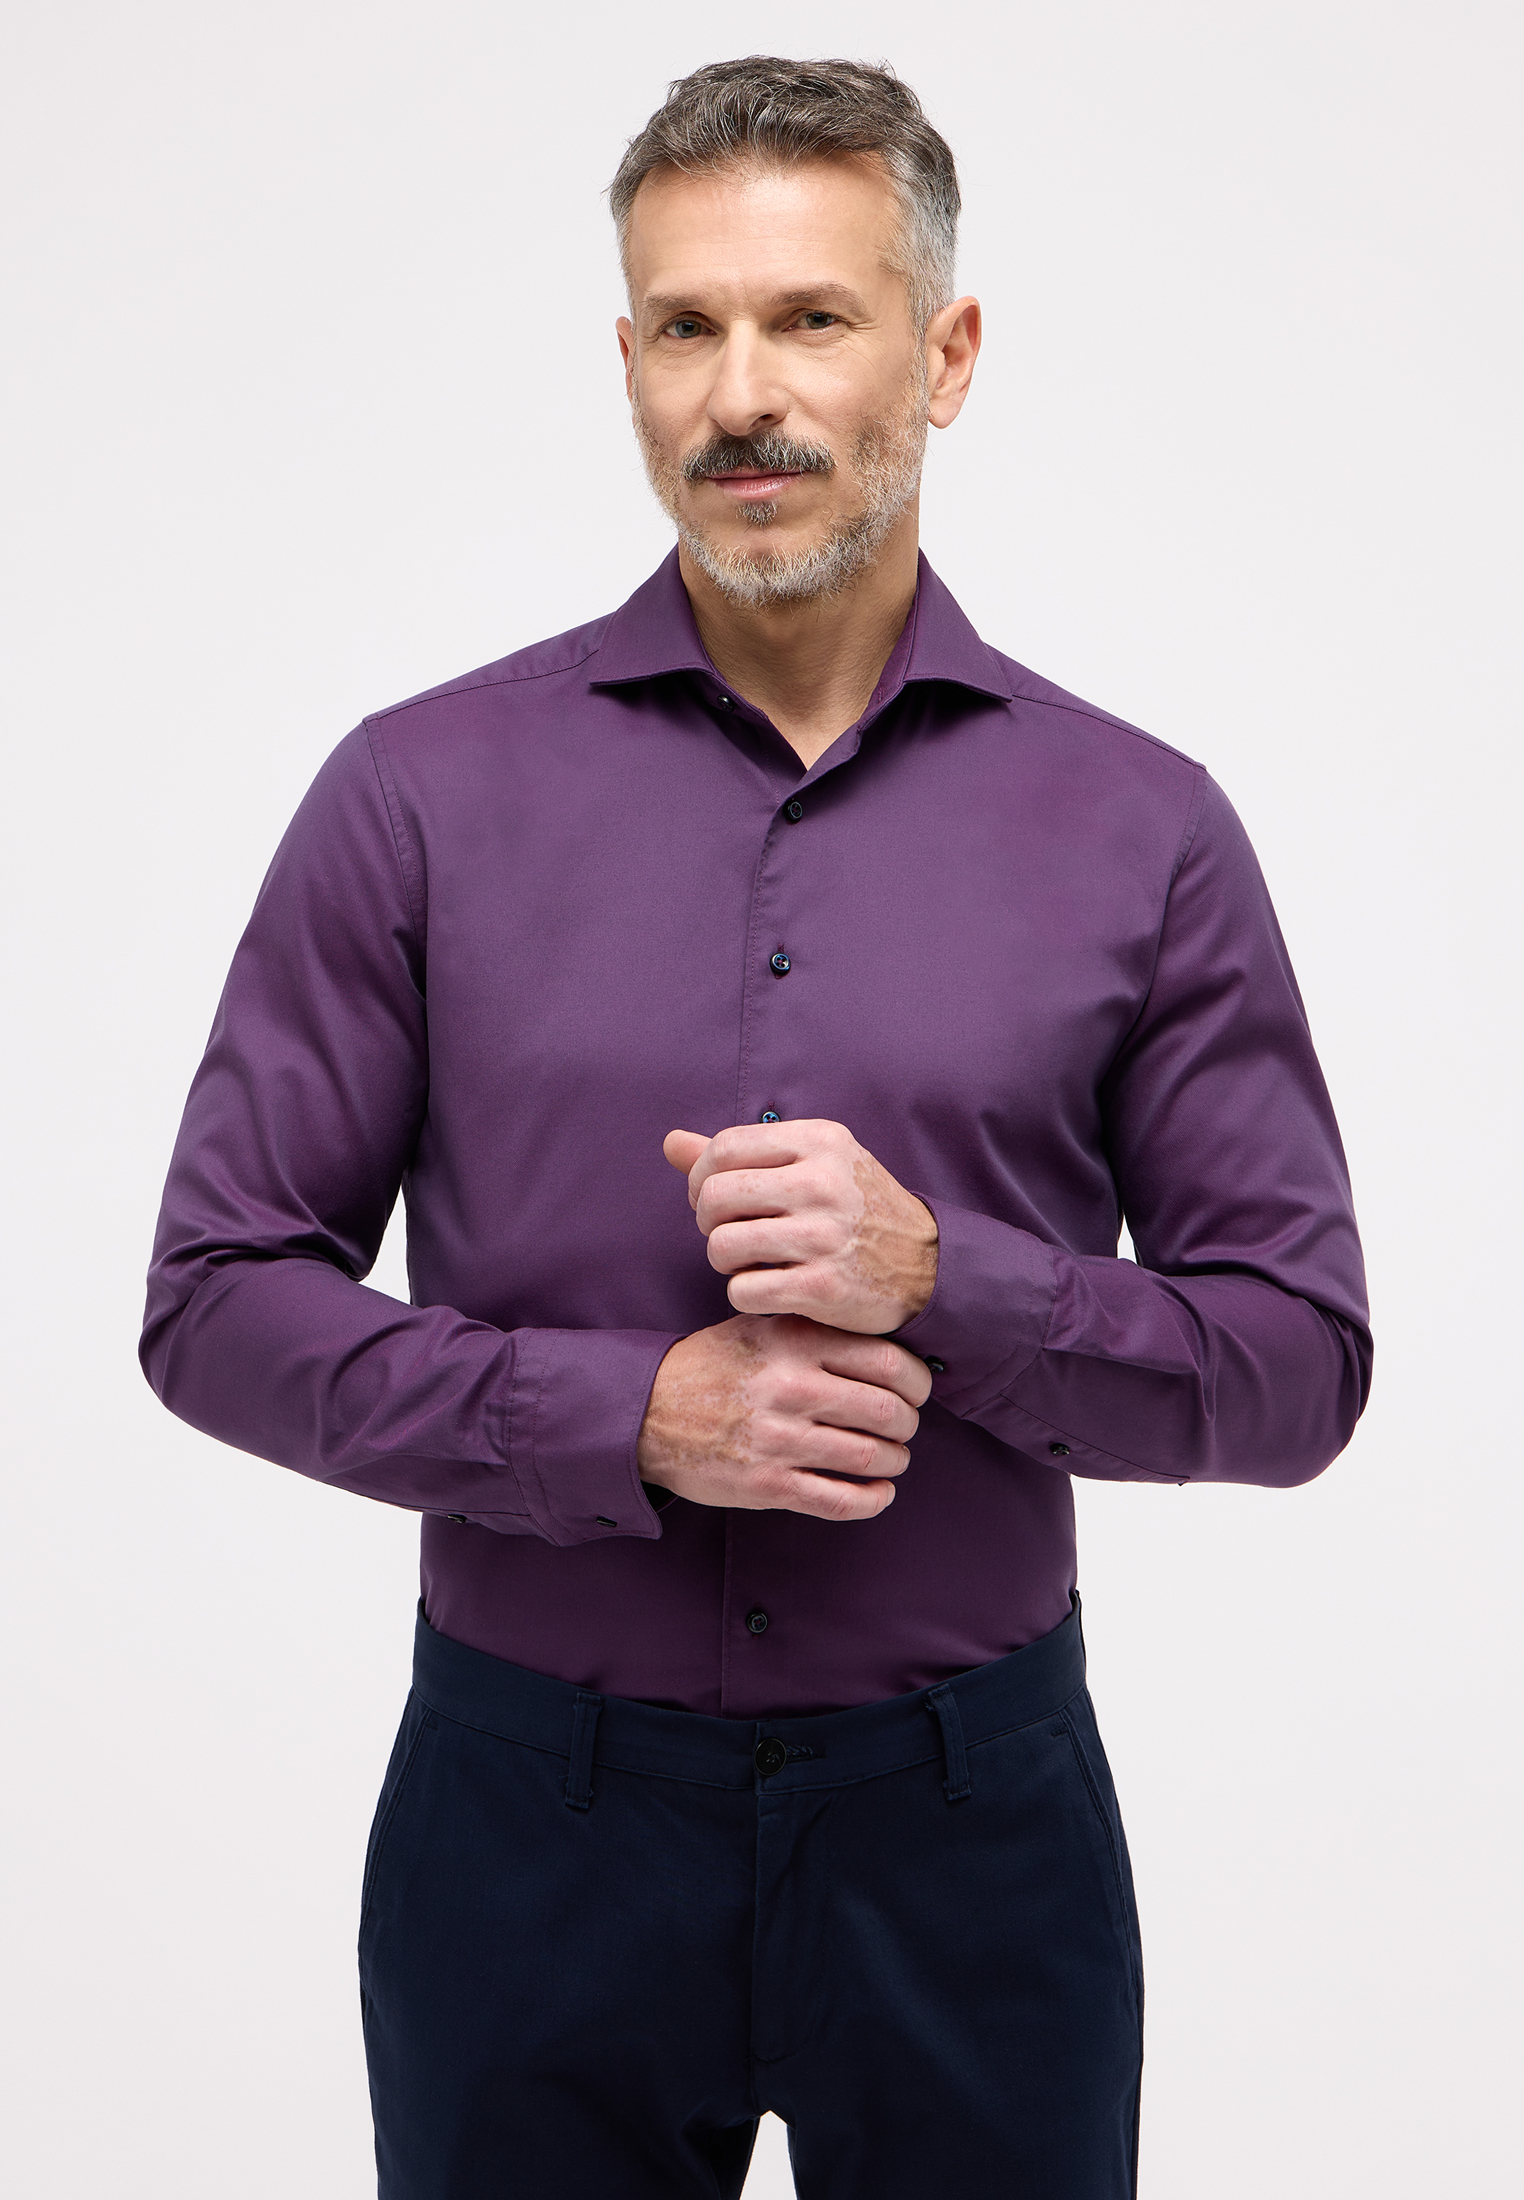 SLIM FIT Soft Luxury Shirt in burgunder unifarben | burgunder | 38 |  Langarm | 1SH03482-05-81-38-1/1